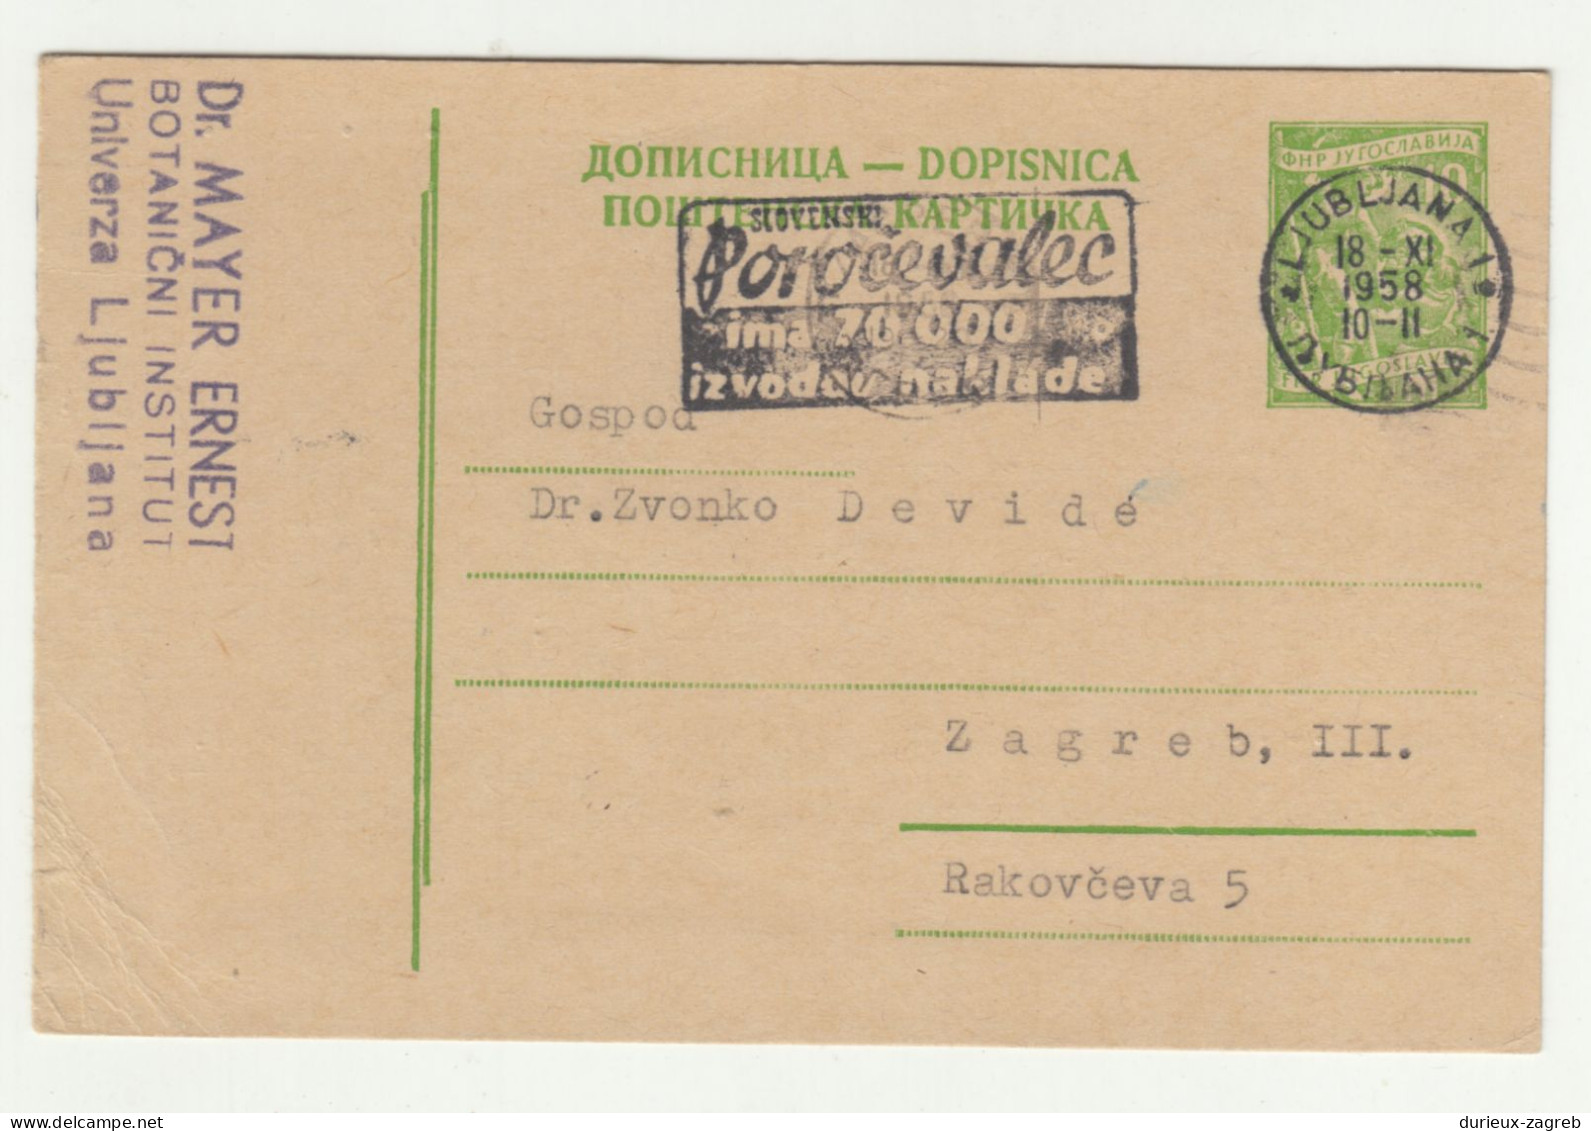 Poročevalec Slogan Postmark On Postal Stationery Postcard Posted 1958 Ljubljana B240503 - Slowenien